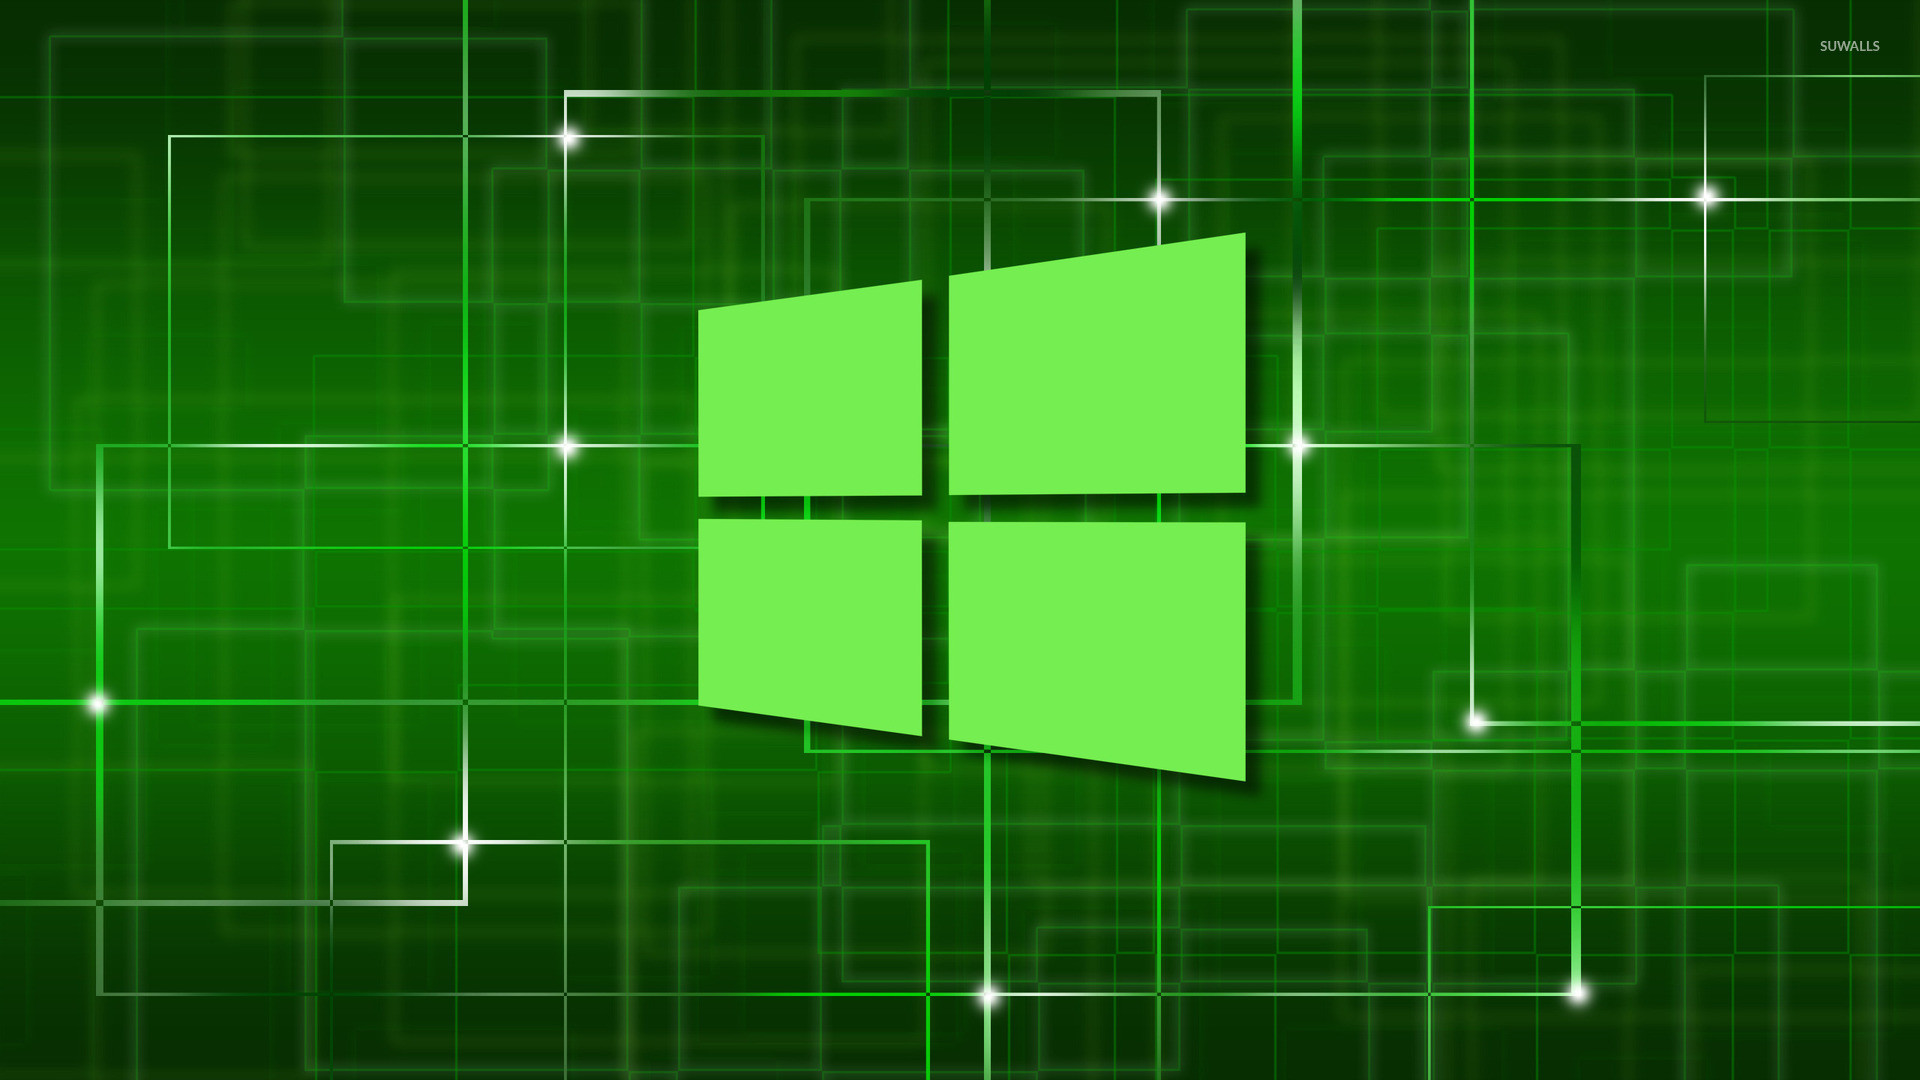 1920x1080 Windows 10 green simple logo on a network wallpaper - Computer .